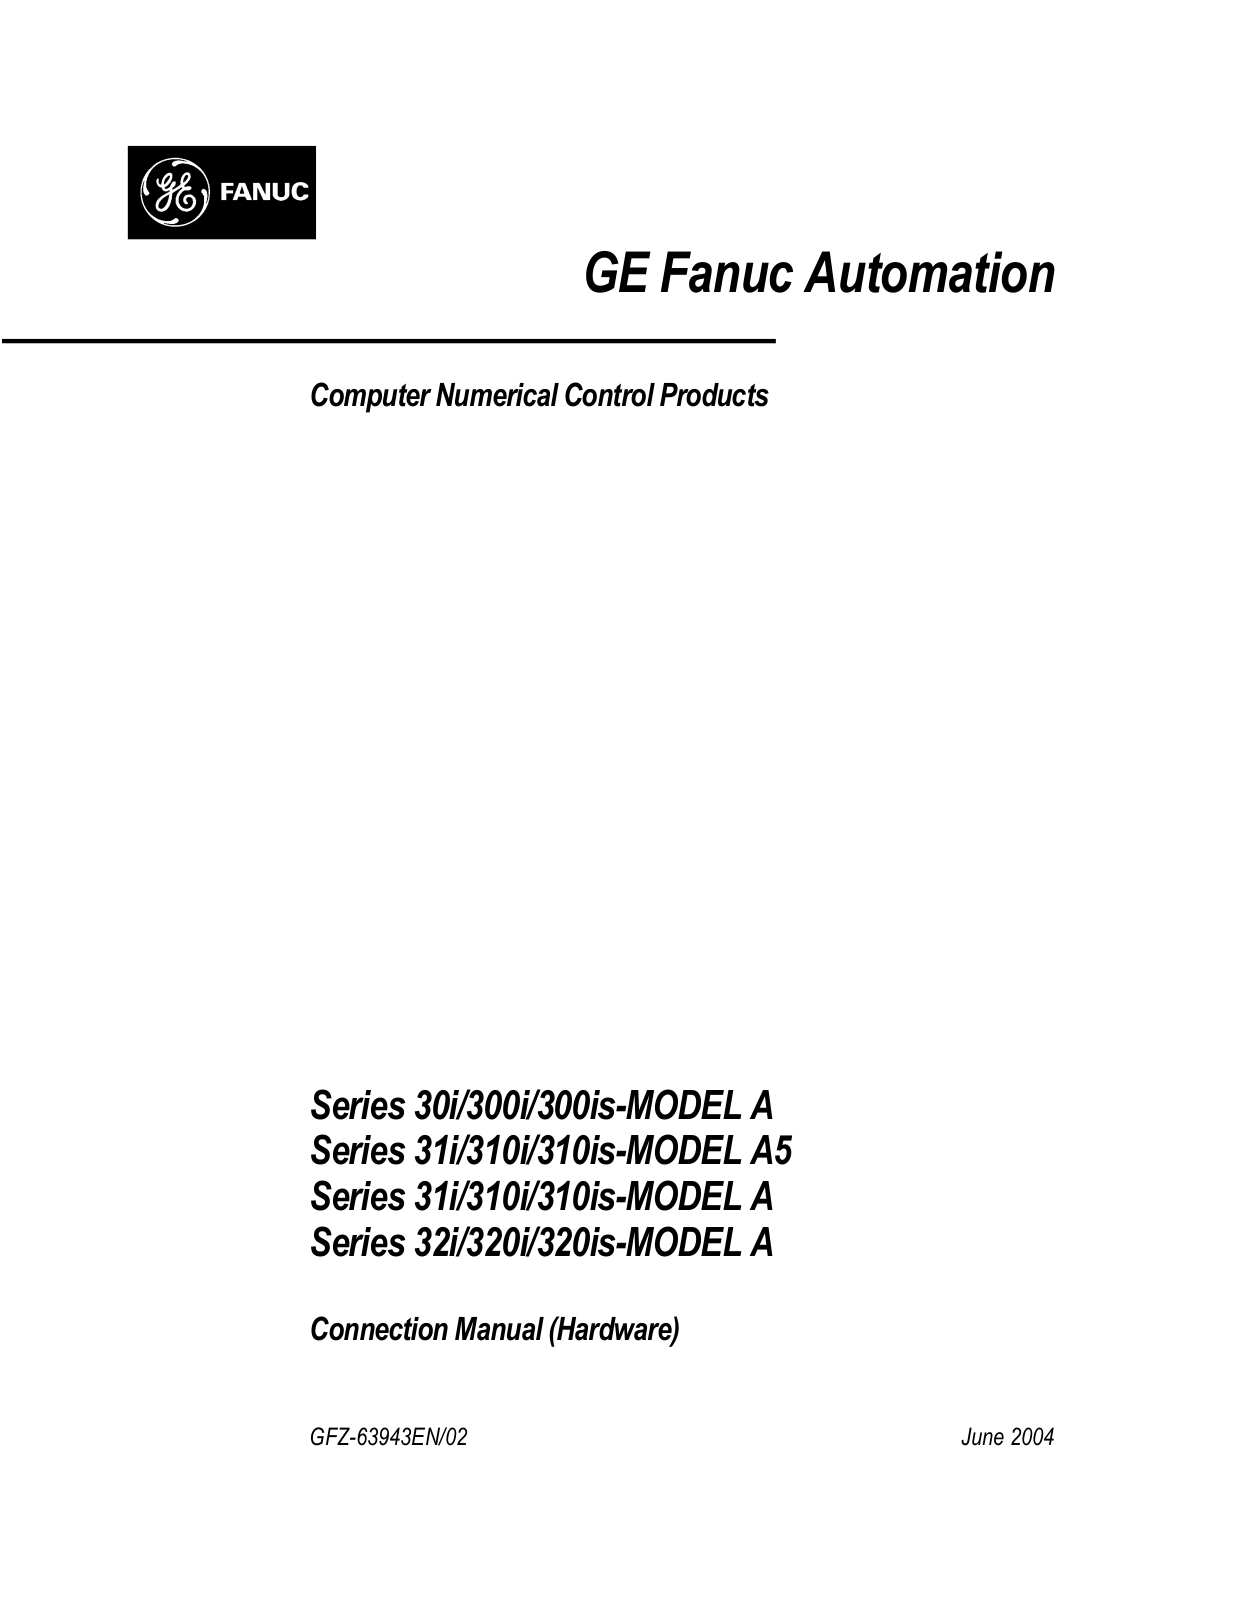 fanuc 30iA, 300iA, 300is A, 31iA5, 310iA5 Connection Manual